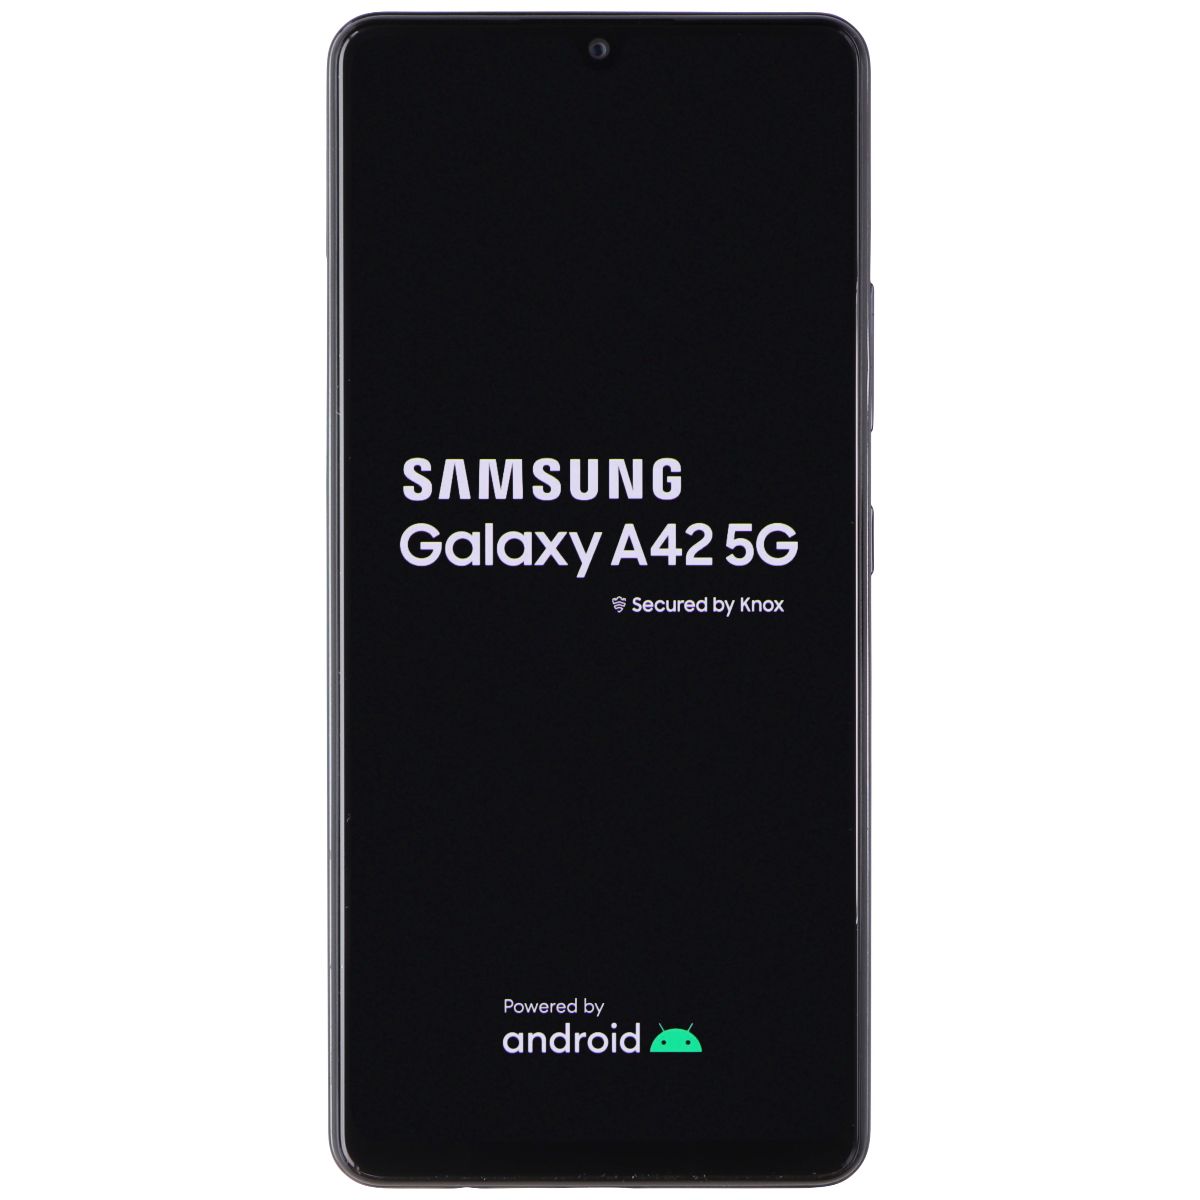 Samsung Galaxy A42 5G (SM-A426U1) Unlocked 128GB/Black - Bad Fingerprint Sensor* Cell Phones & Smartphones Samsung    - Simple Cell Bulk Wholesale Pricing - USA Seller